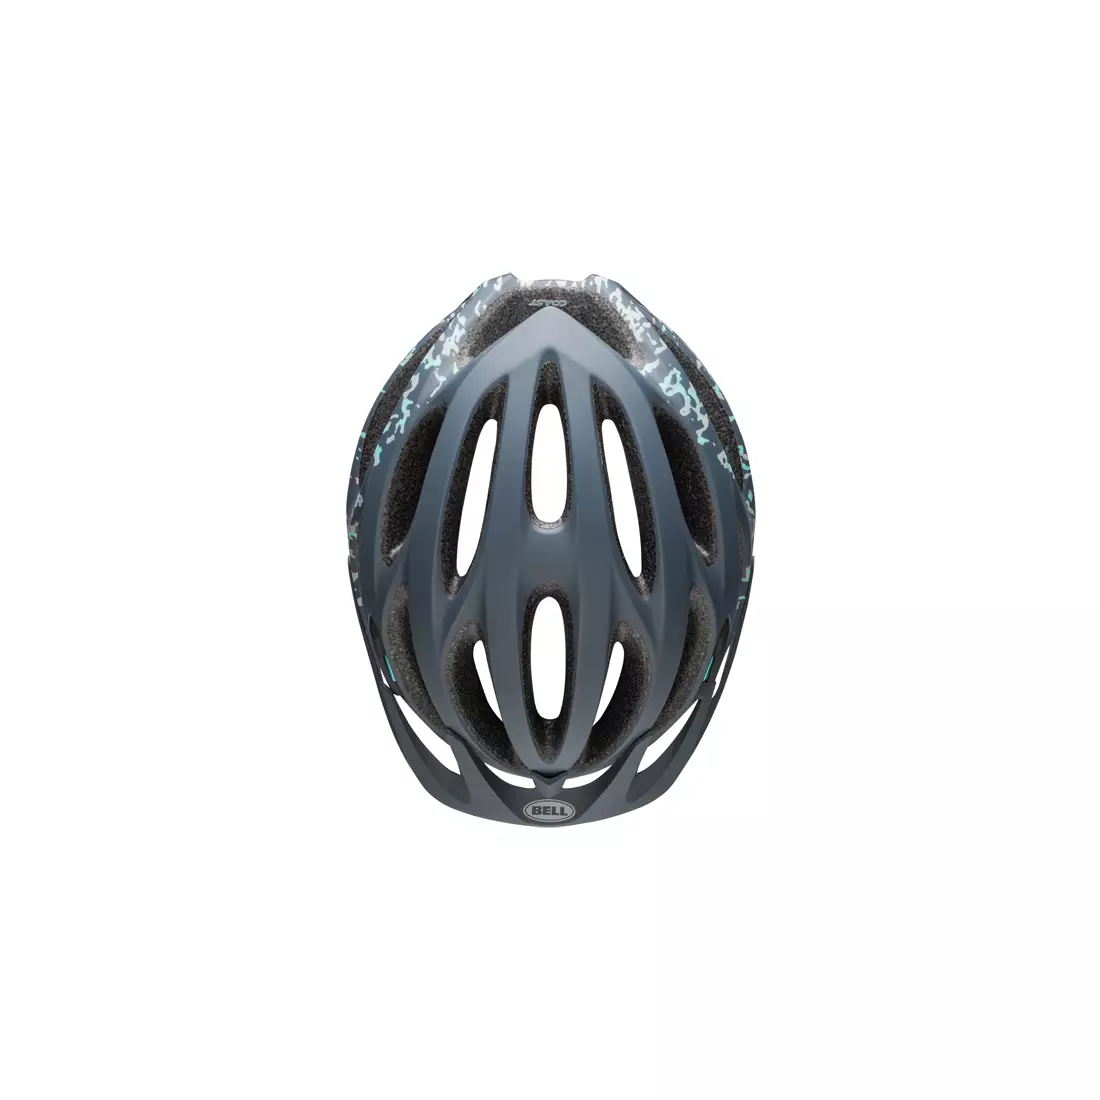 BELL MTB COAST JOY RIDE MIPS BEL-7088749 women's bicycle helmet matte lead stone